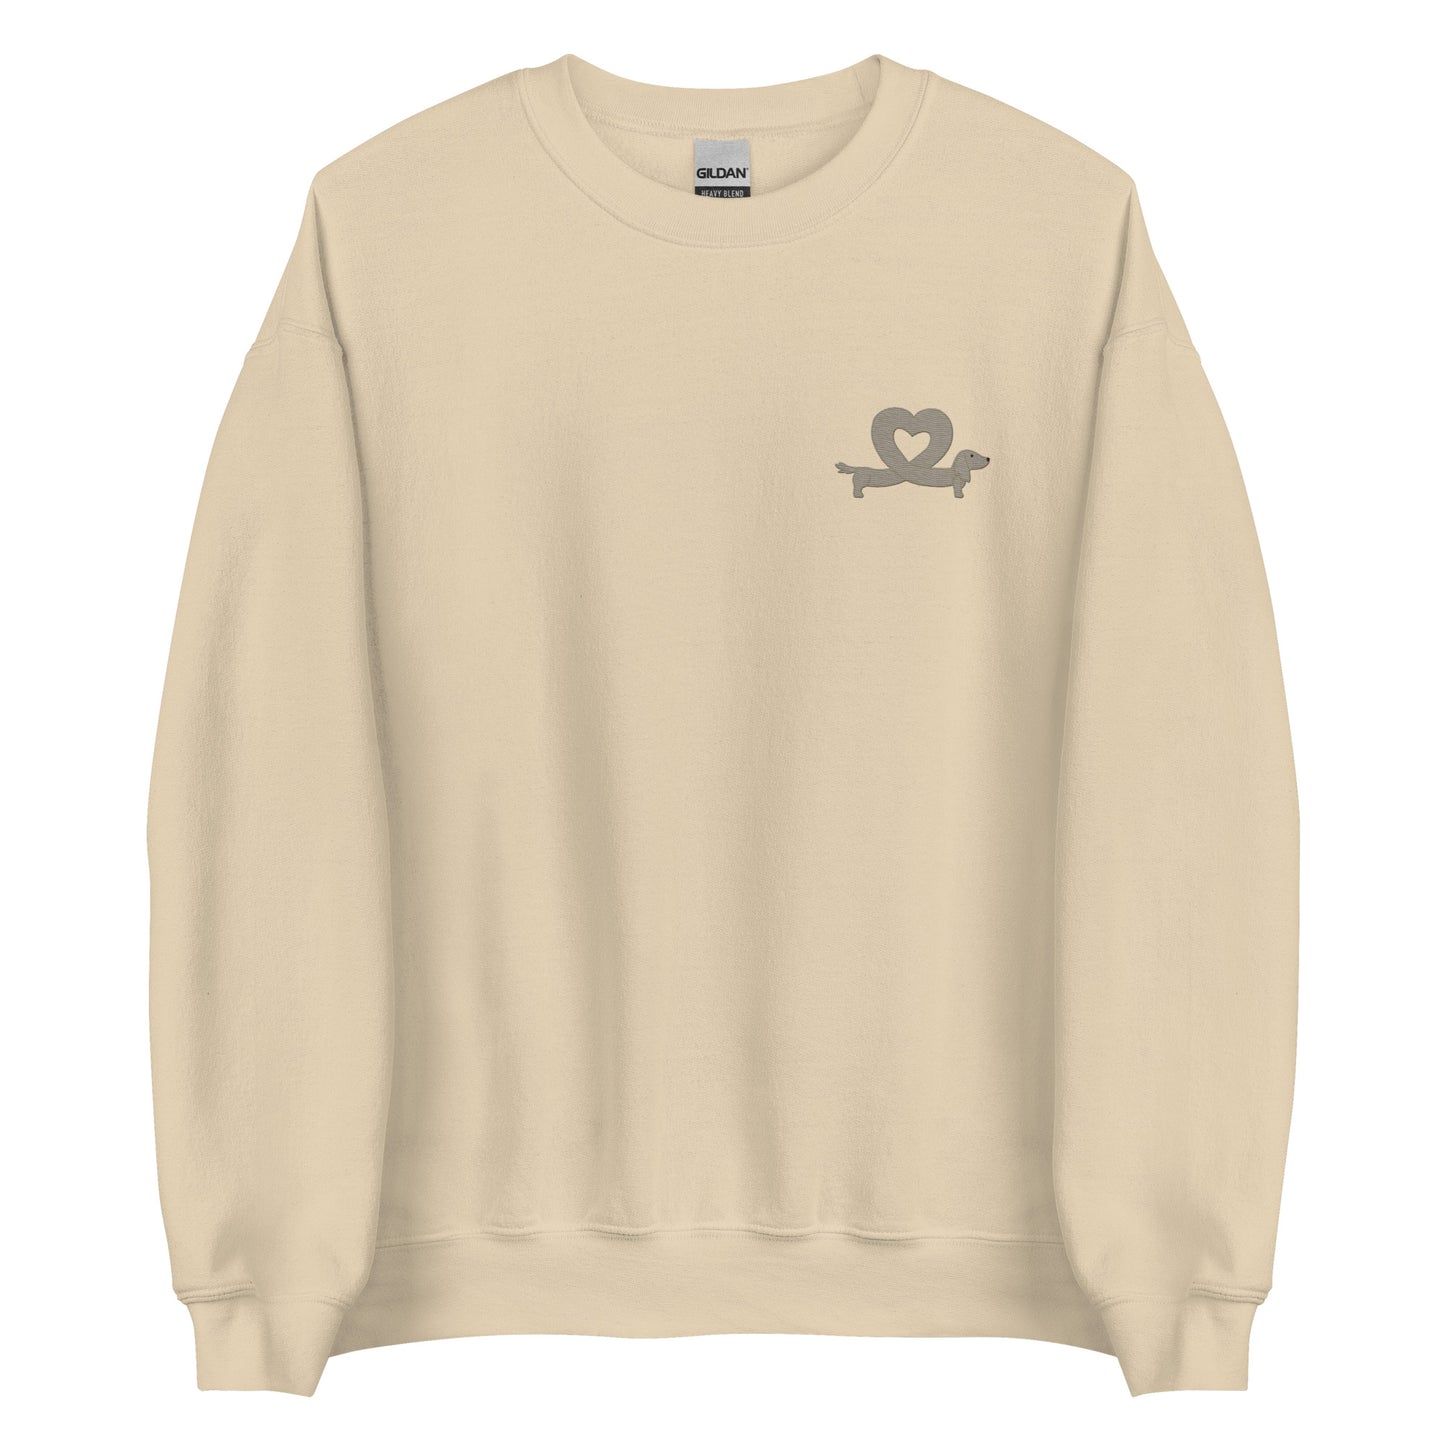 Embroidered Sweatshirt - I HEART DACHSHUNDS - cream